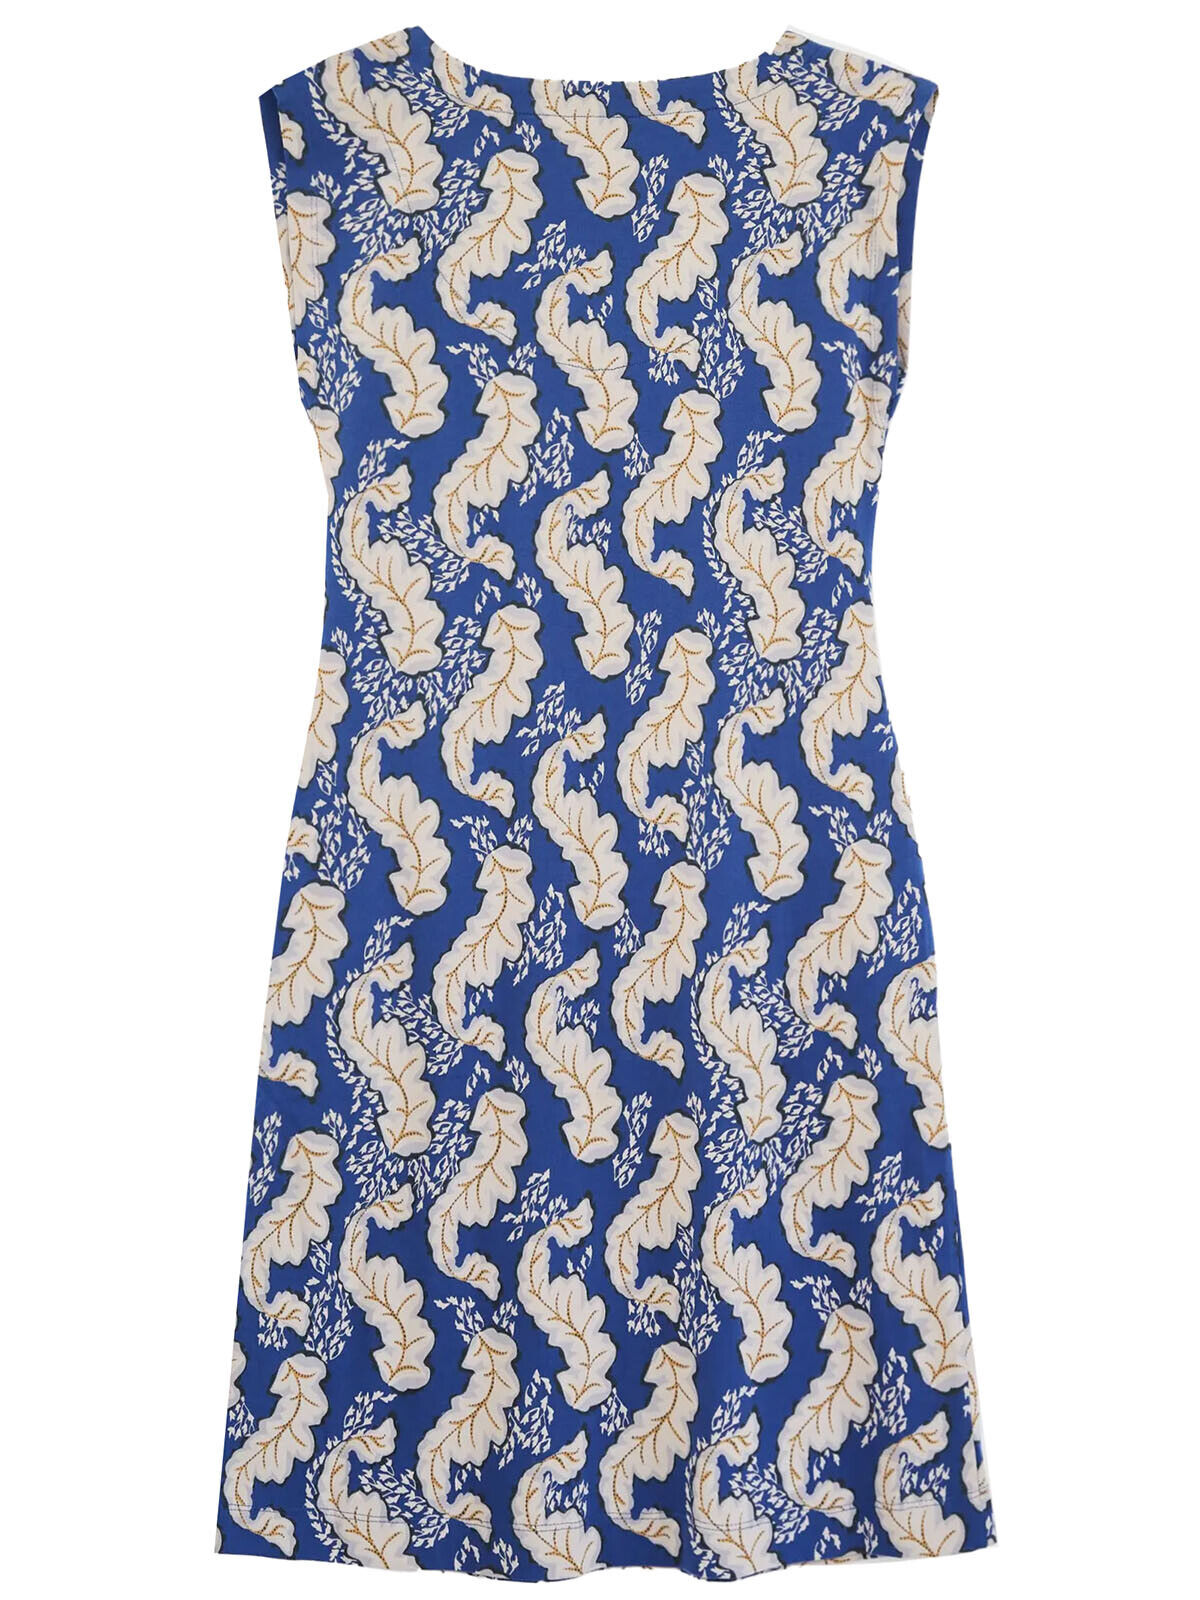 EX WHITE STUFF Blue Lena Fairtrade Dress Sizes 6, 8, 10, 12, 14, 18 RRP £55